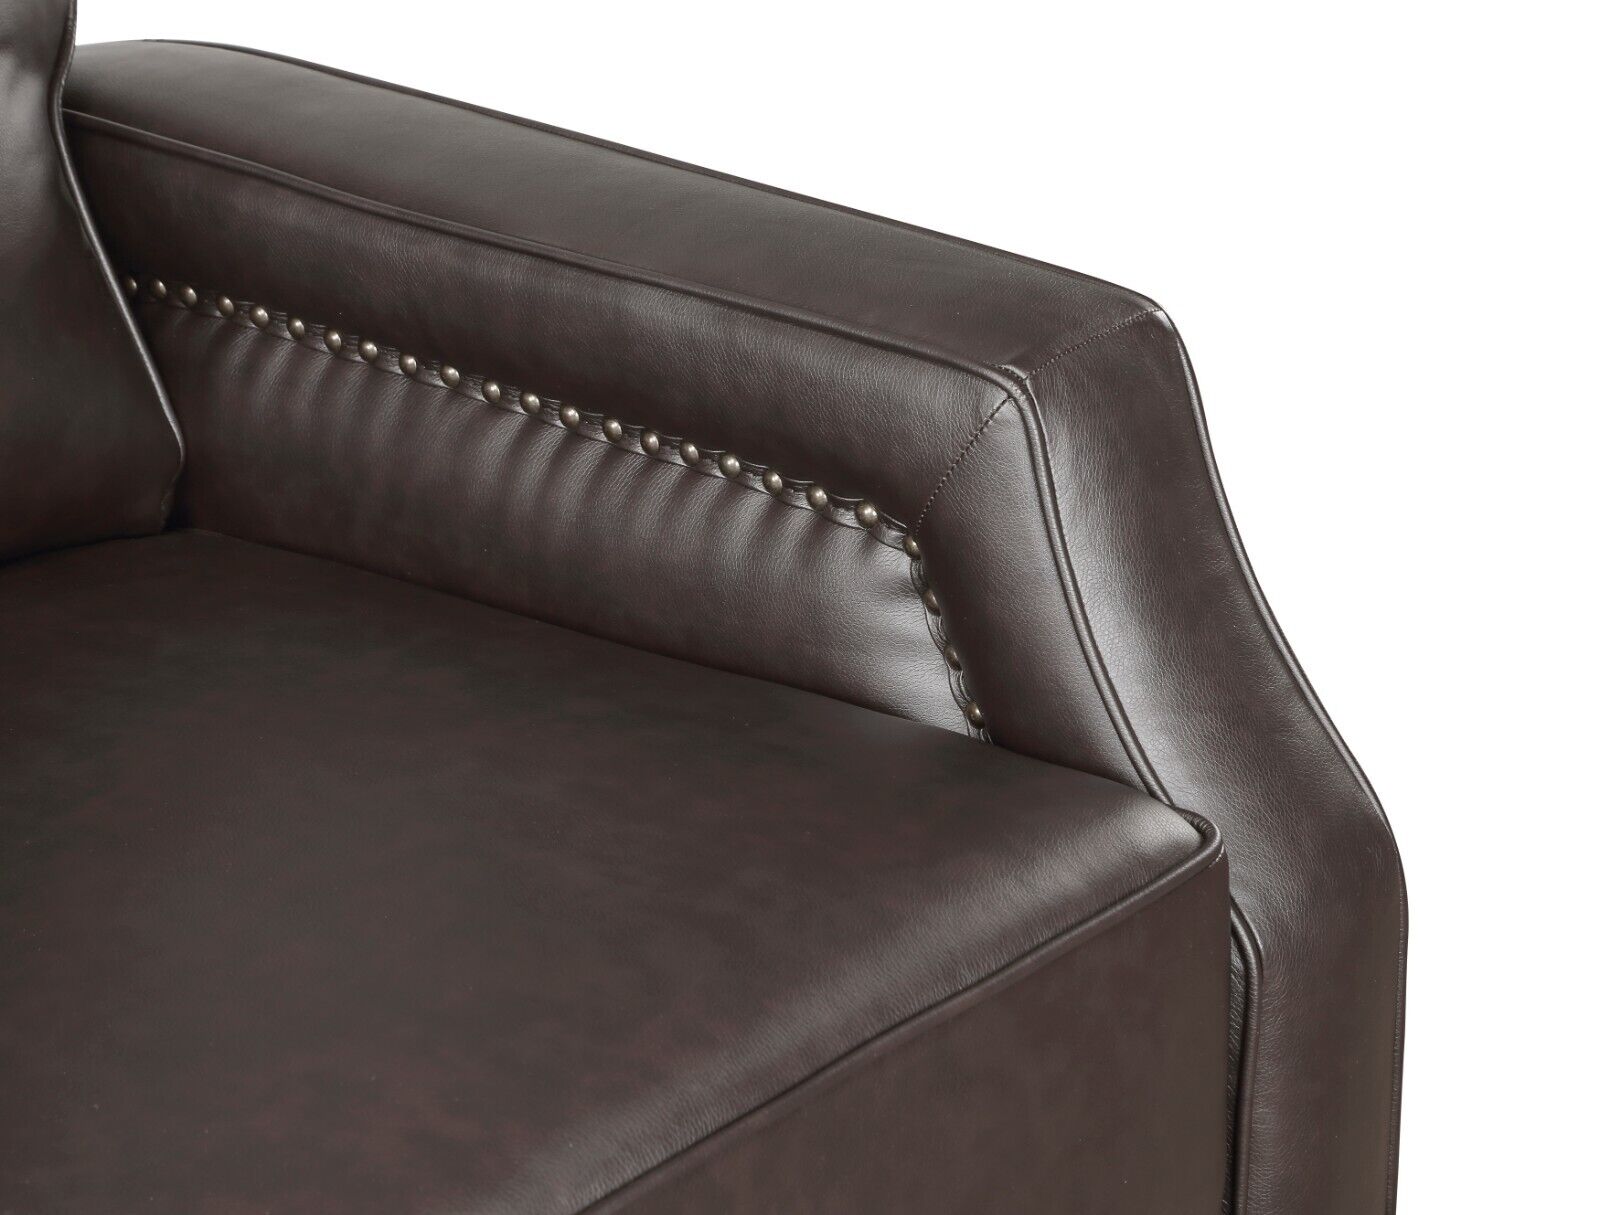 Esofastore 1pc Self Reclining Chair Dark Brown Faux Leather Solidwood Furntiure for Livinig Room Bedroom Push Back Reclining Nailhead Trim